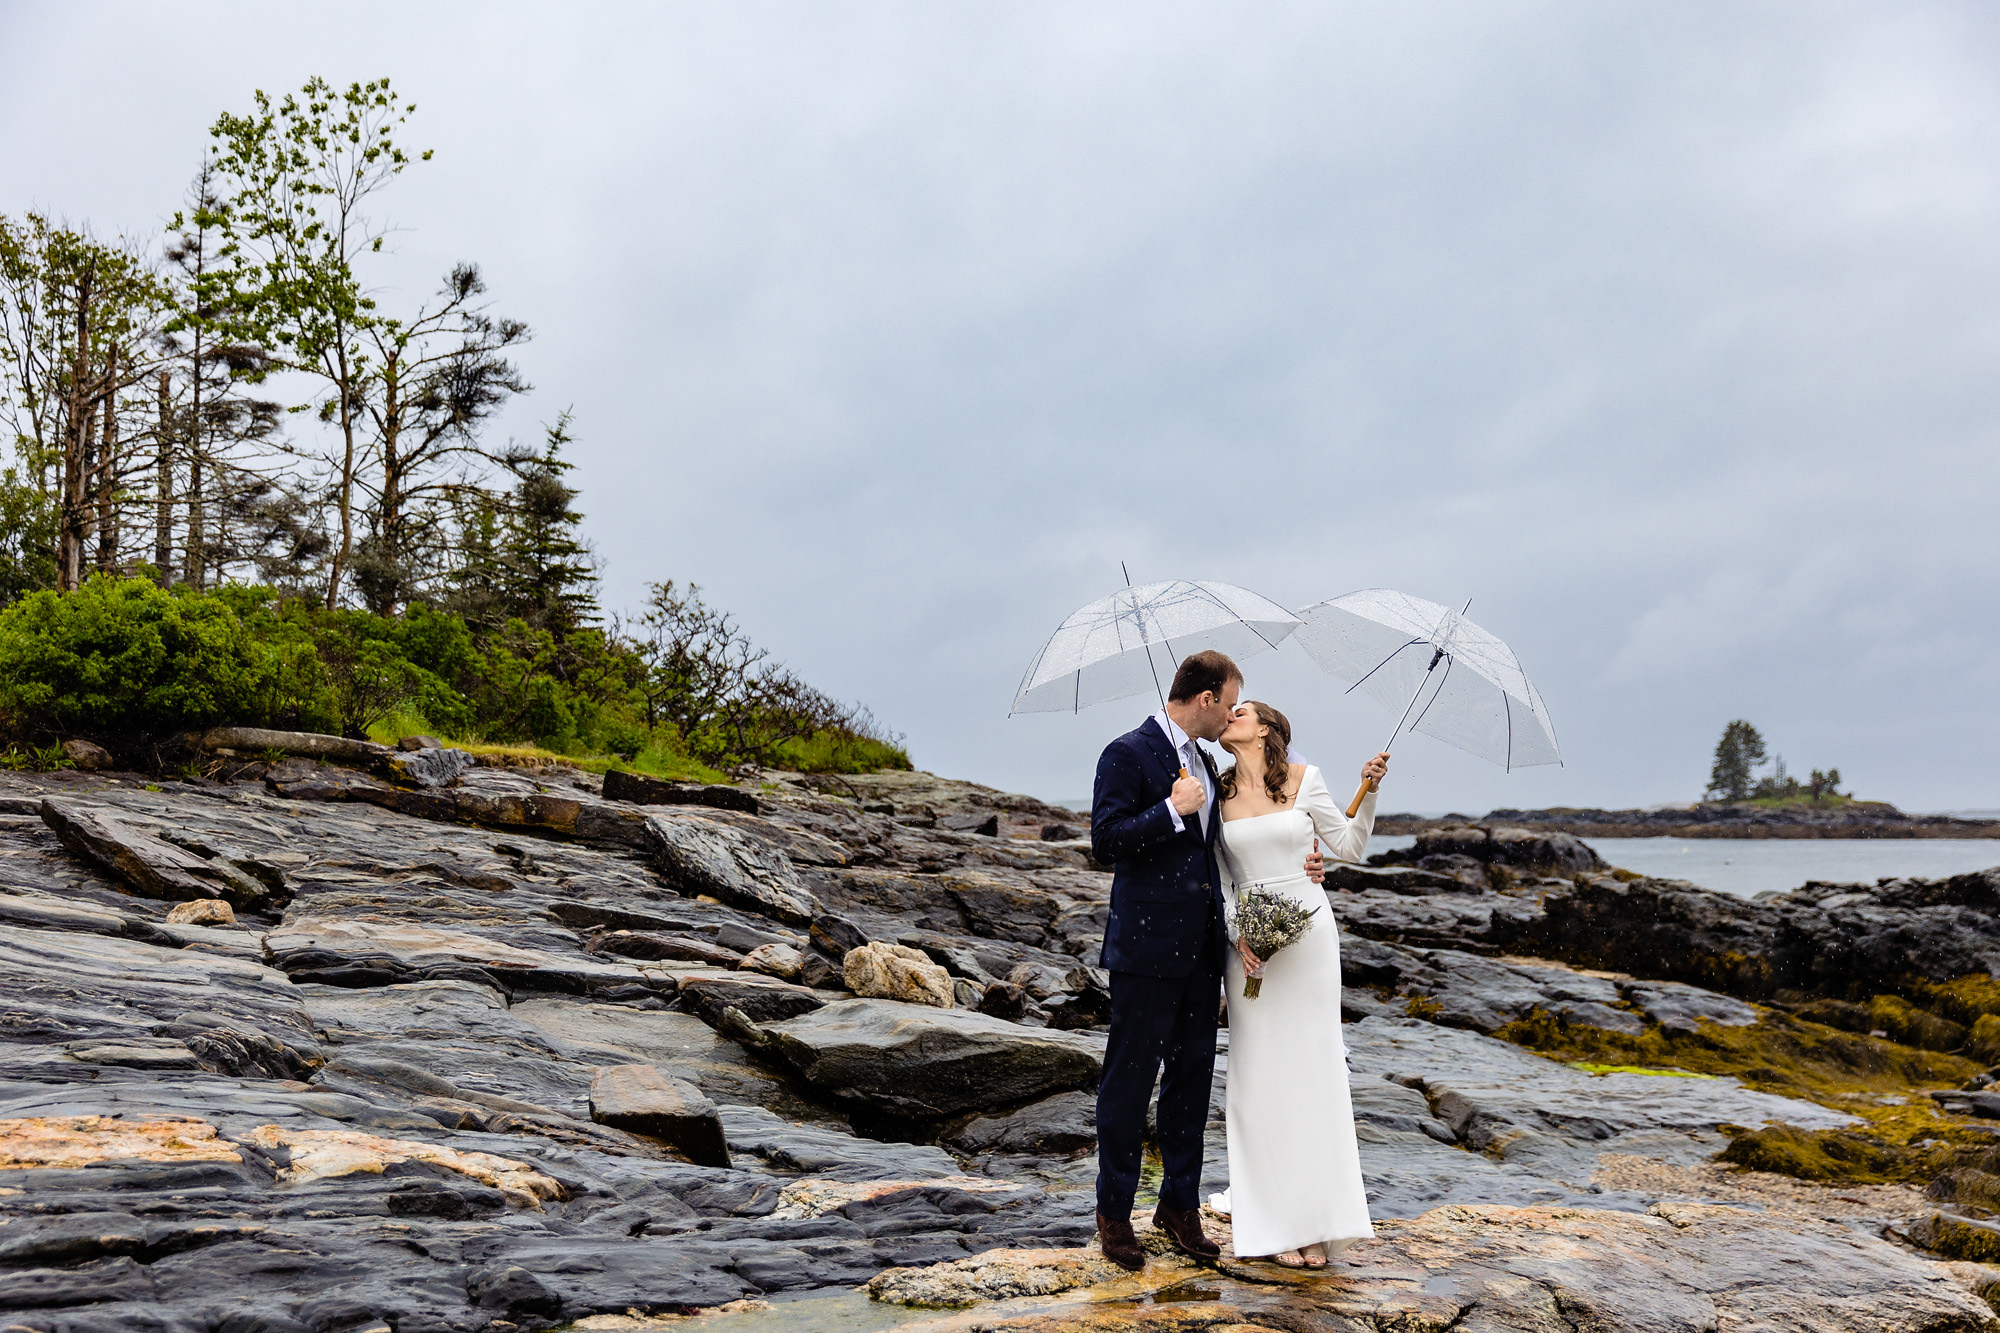 Rainy Boothbay Harbor wedding portraits